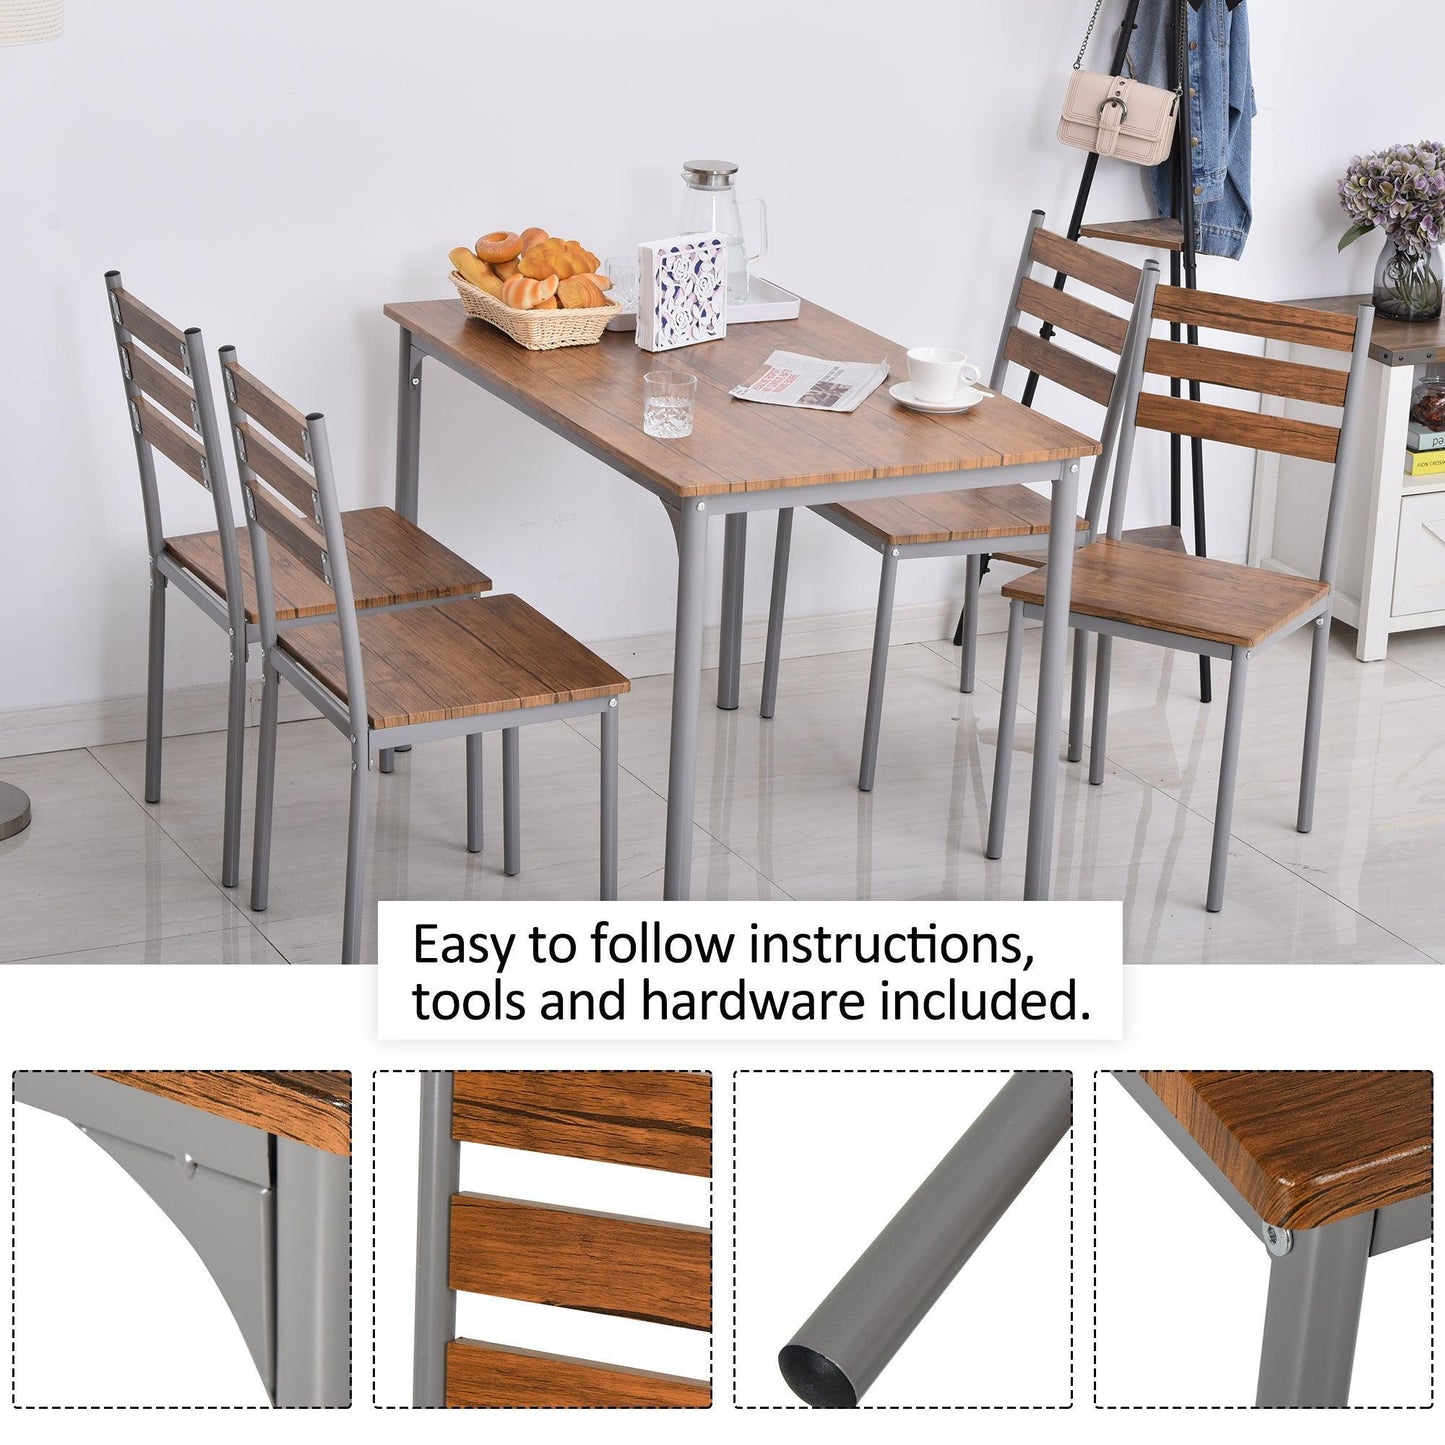 HOMCOM 5-Piece Brown Dining Set: Table & 4 Chairs - ALL4U RETAILER LTD